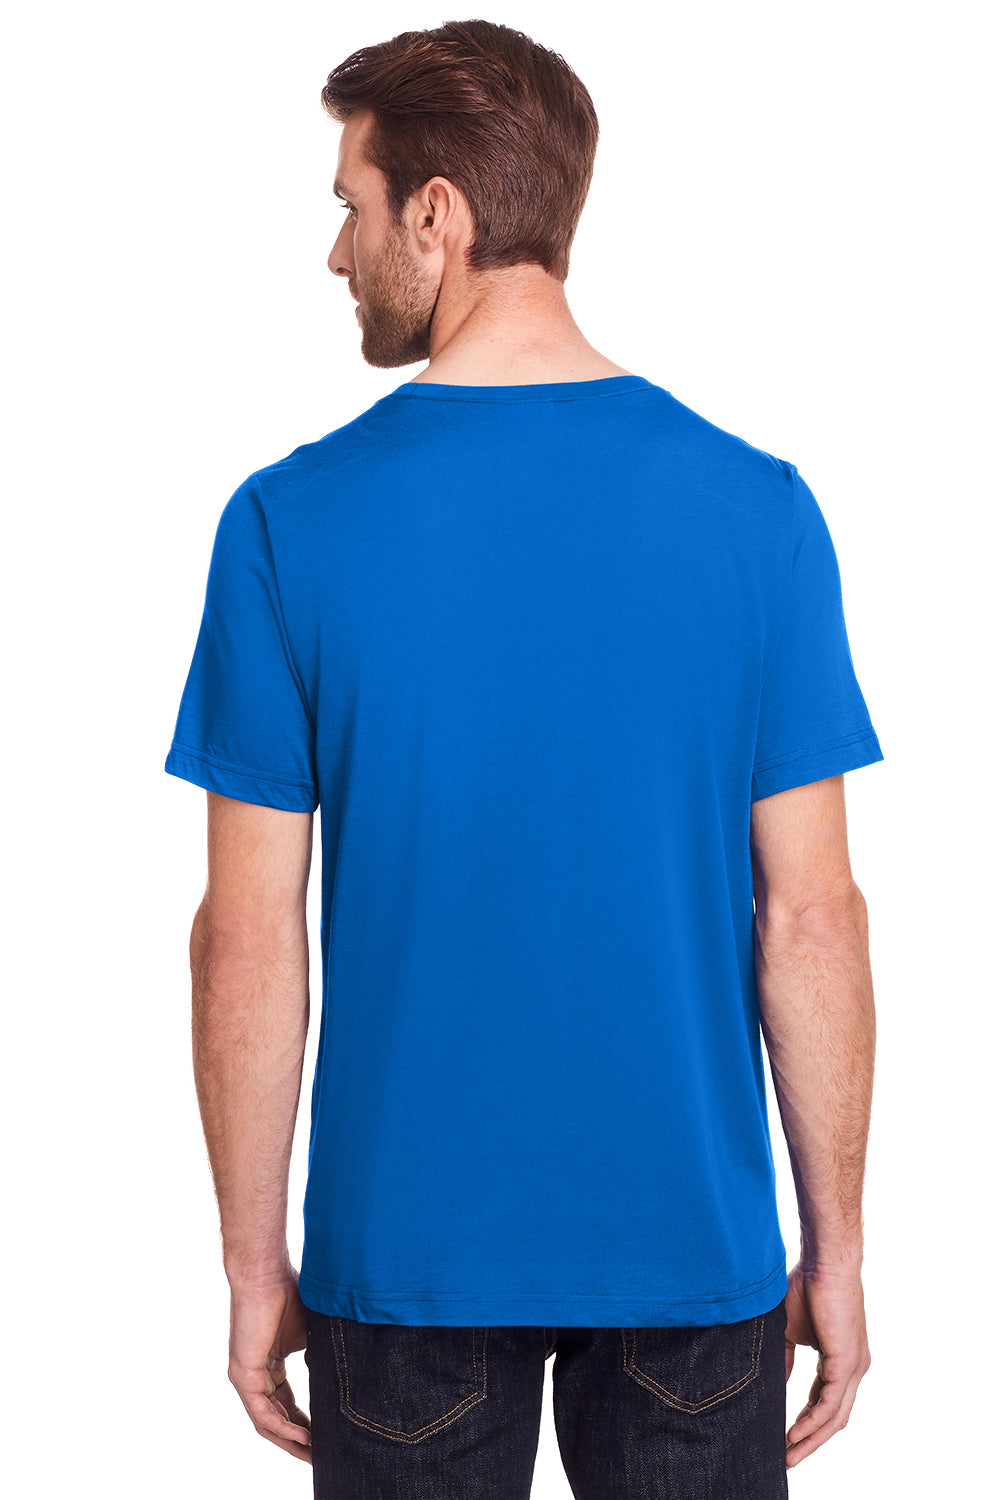 Core 365 CE111 Mens Fusion ChromaSoft Performance Moisture Wicking Short Sleeve Crewneck T-Shirt Royal Blue Back